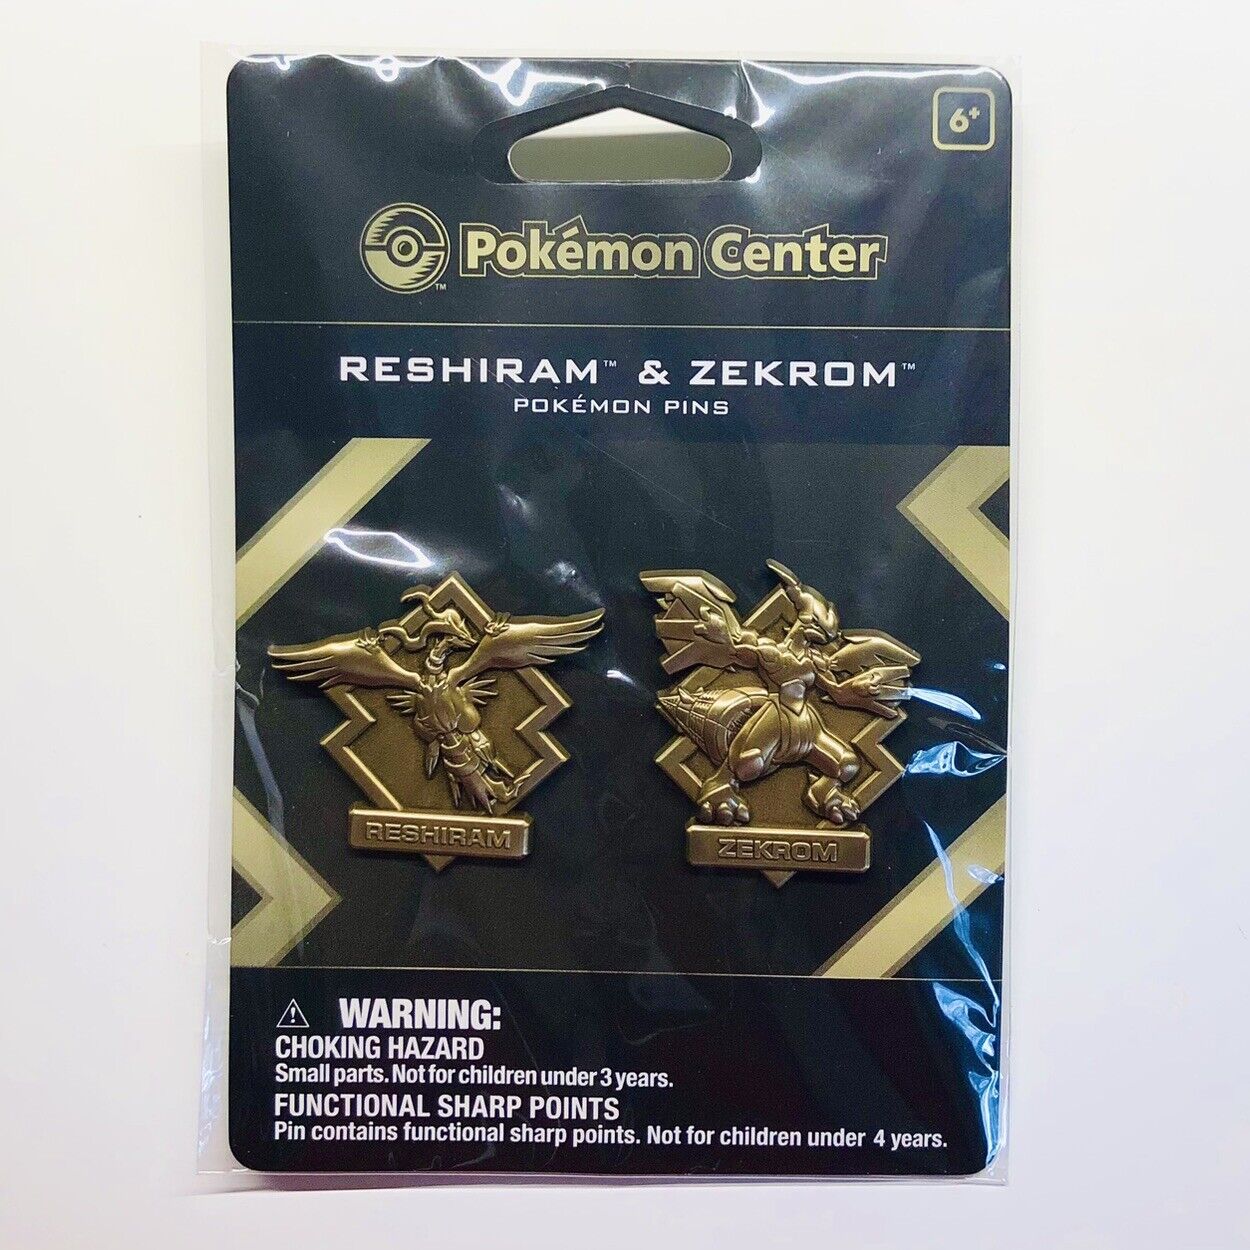 Reshiram & Zekrom Pokemon Center Pins Sealed (2 Pack) Exclusive Retired 2018